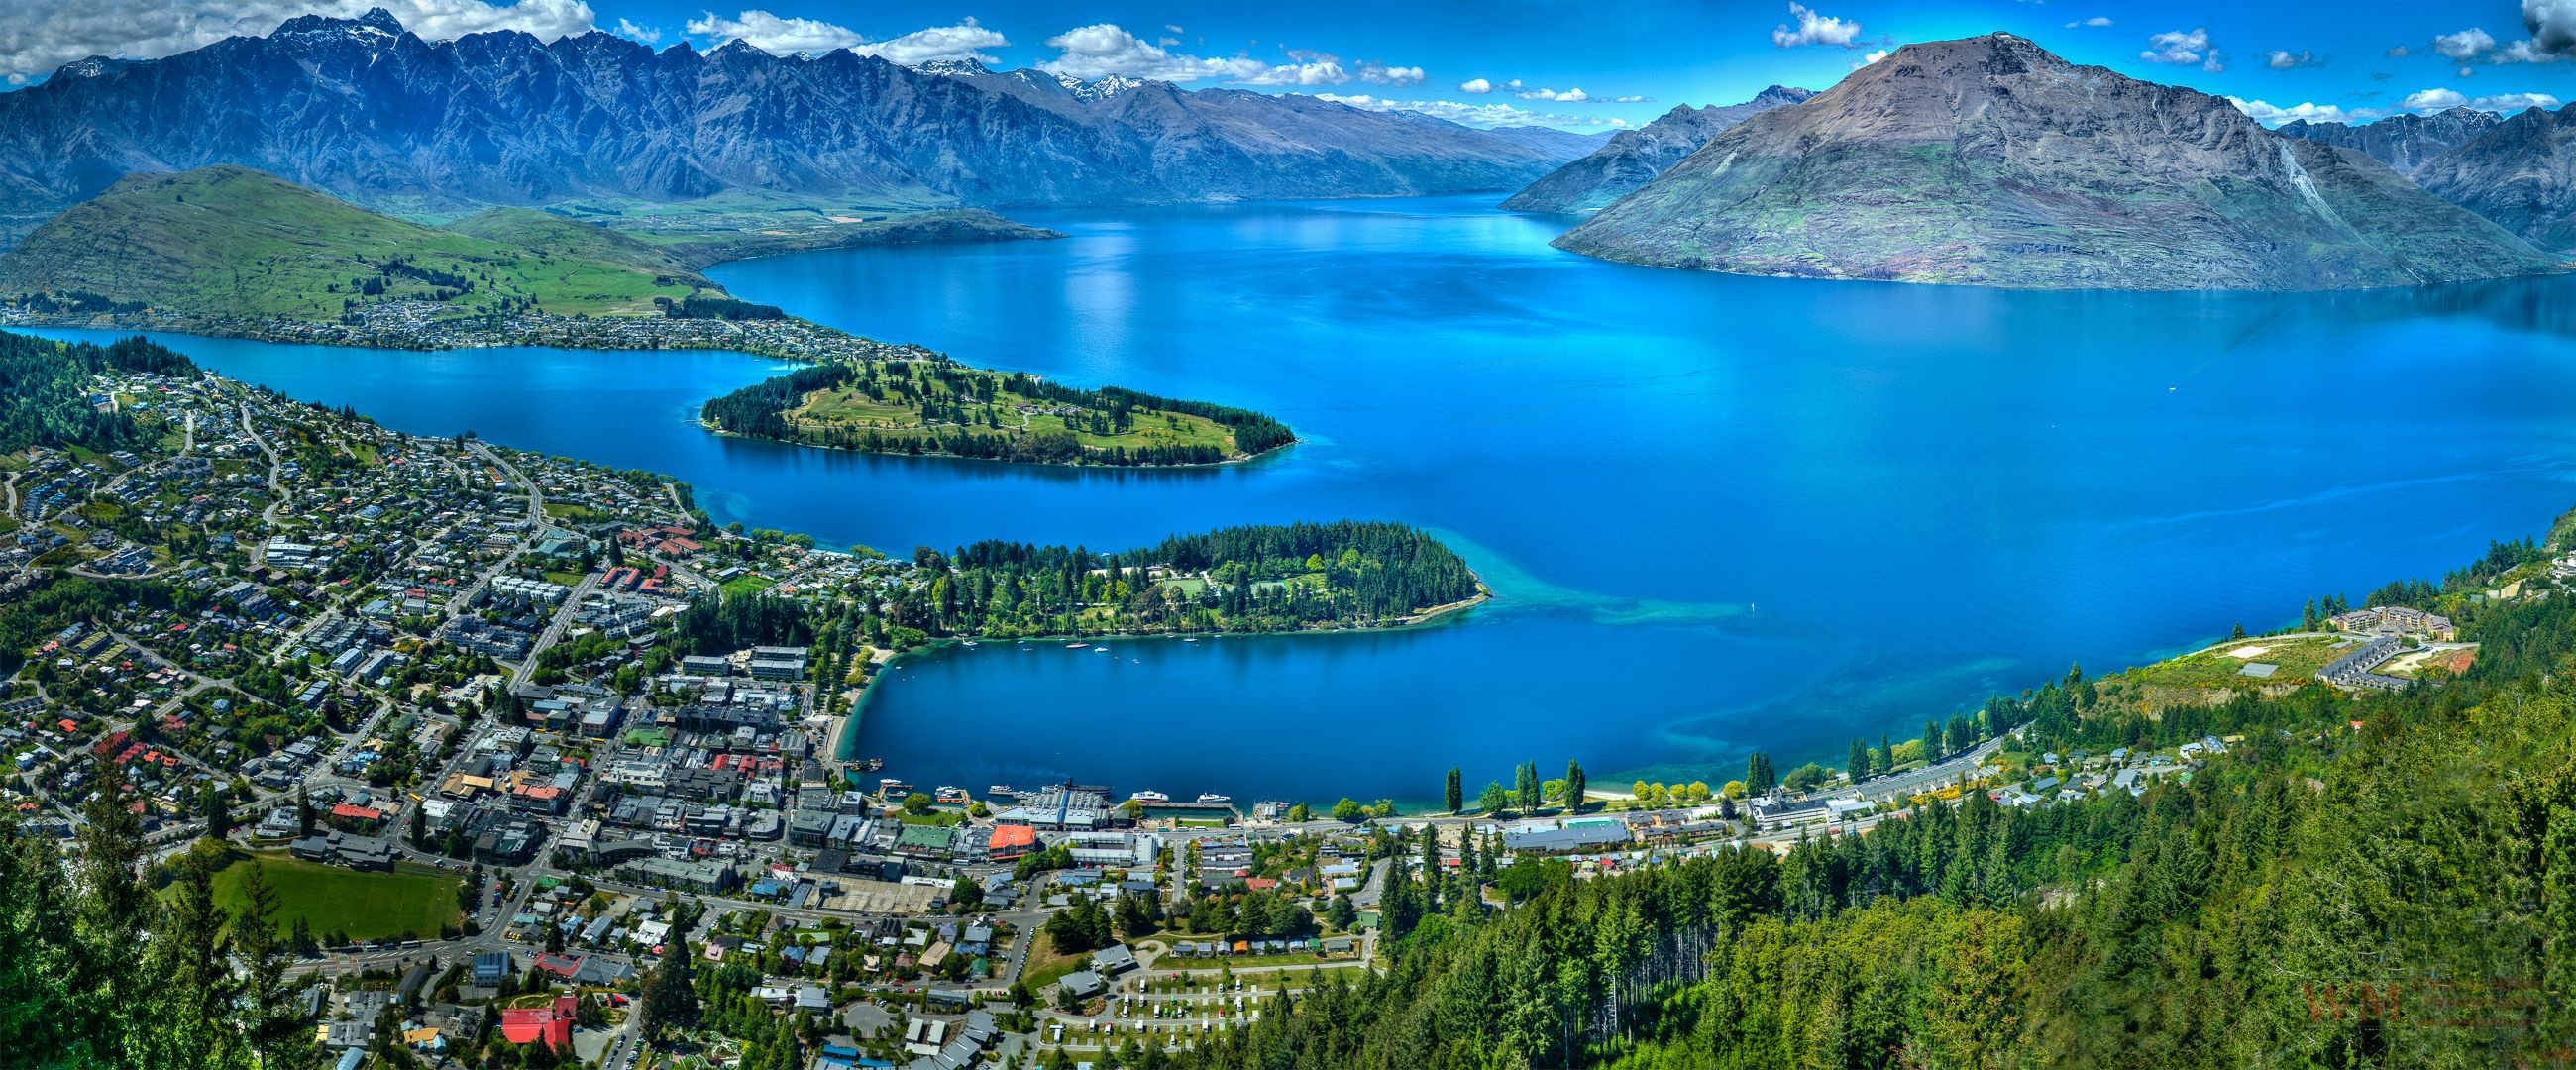 Blue Lake, Queenstown beauty, New Zealand paradise, Mesmerizing views, 2600x1080 Dual Screen Desktop